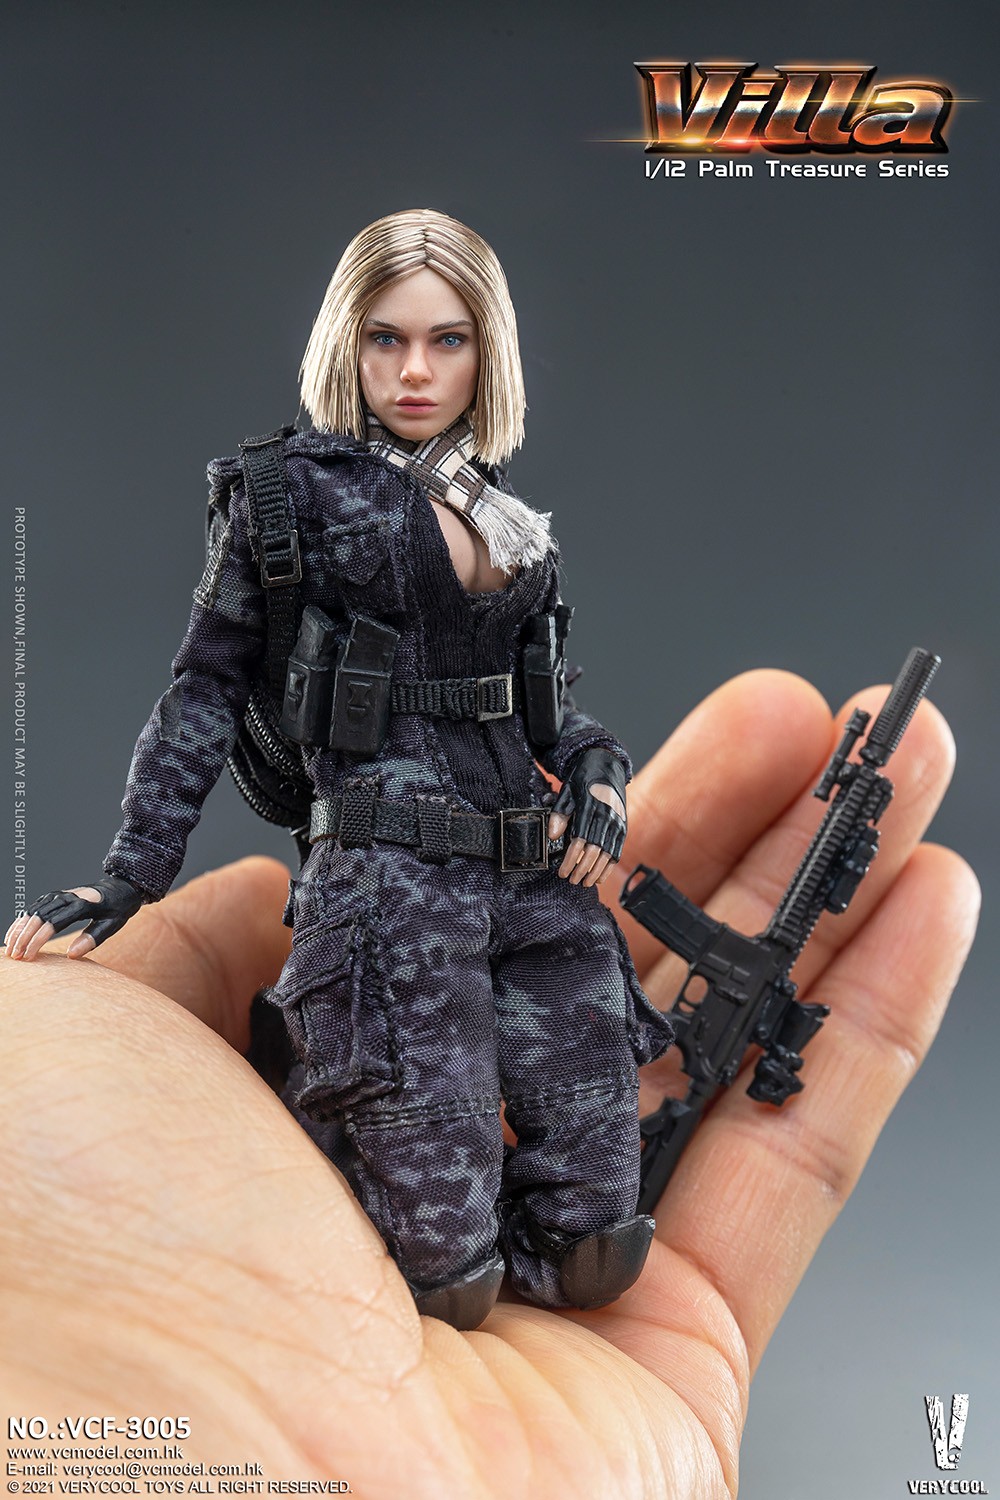 VERYCOOL VCF-3005 1/12 Palm Treasure Series Black MC Camouflage Women Soldier Villa